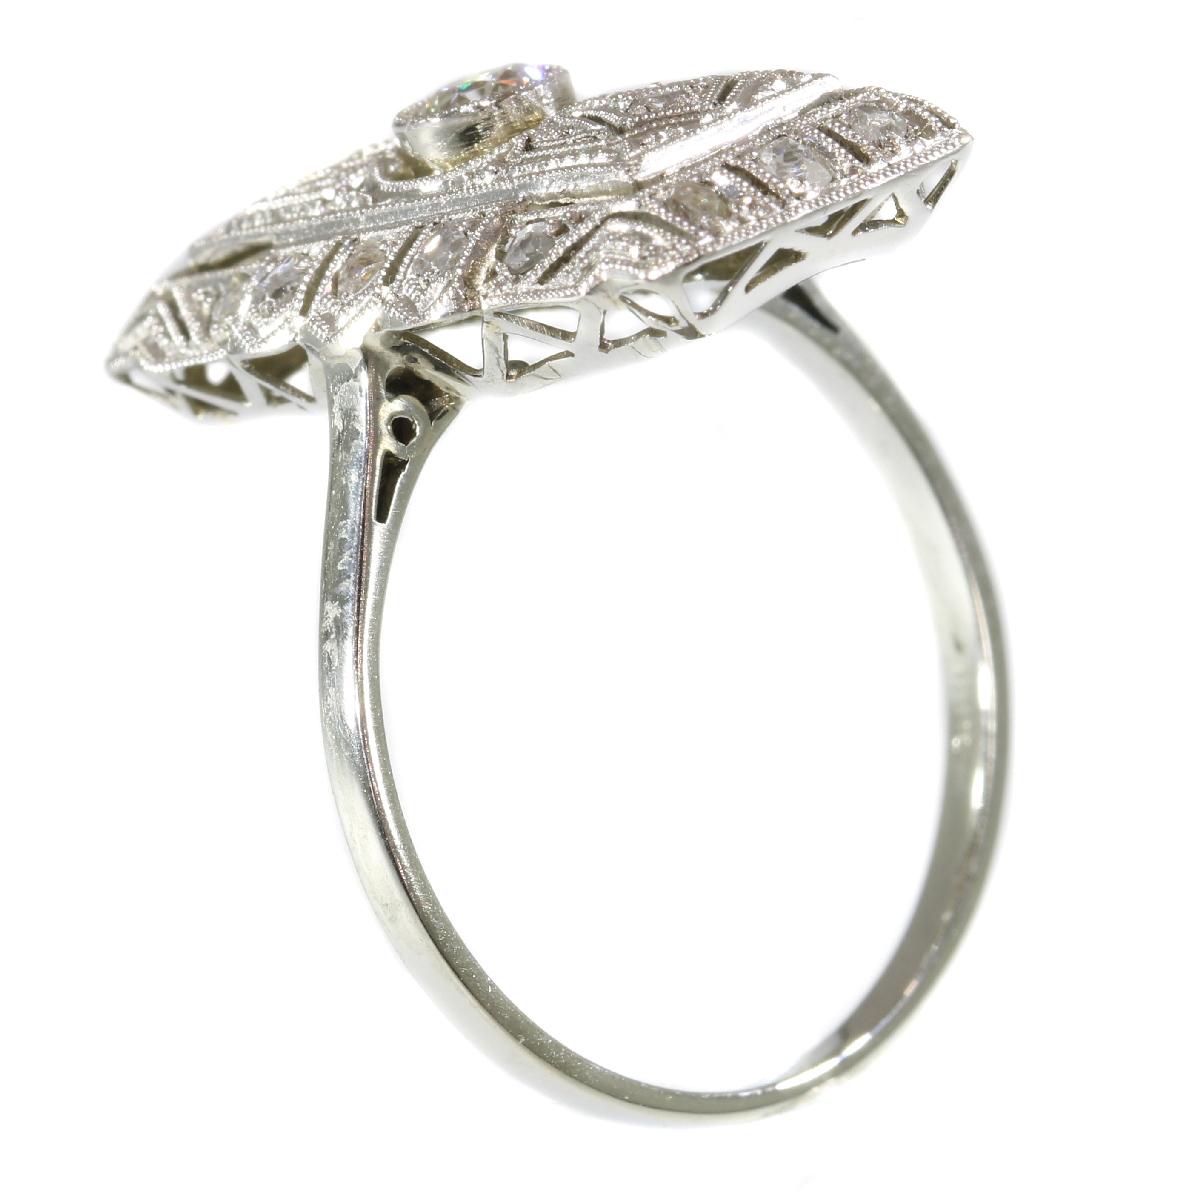  Edwardian Art Deco Diamond Engagement Ring For Sale 1